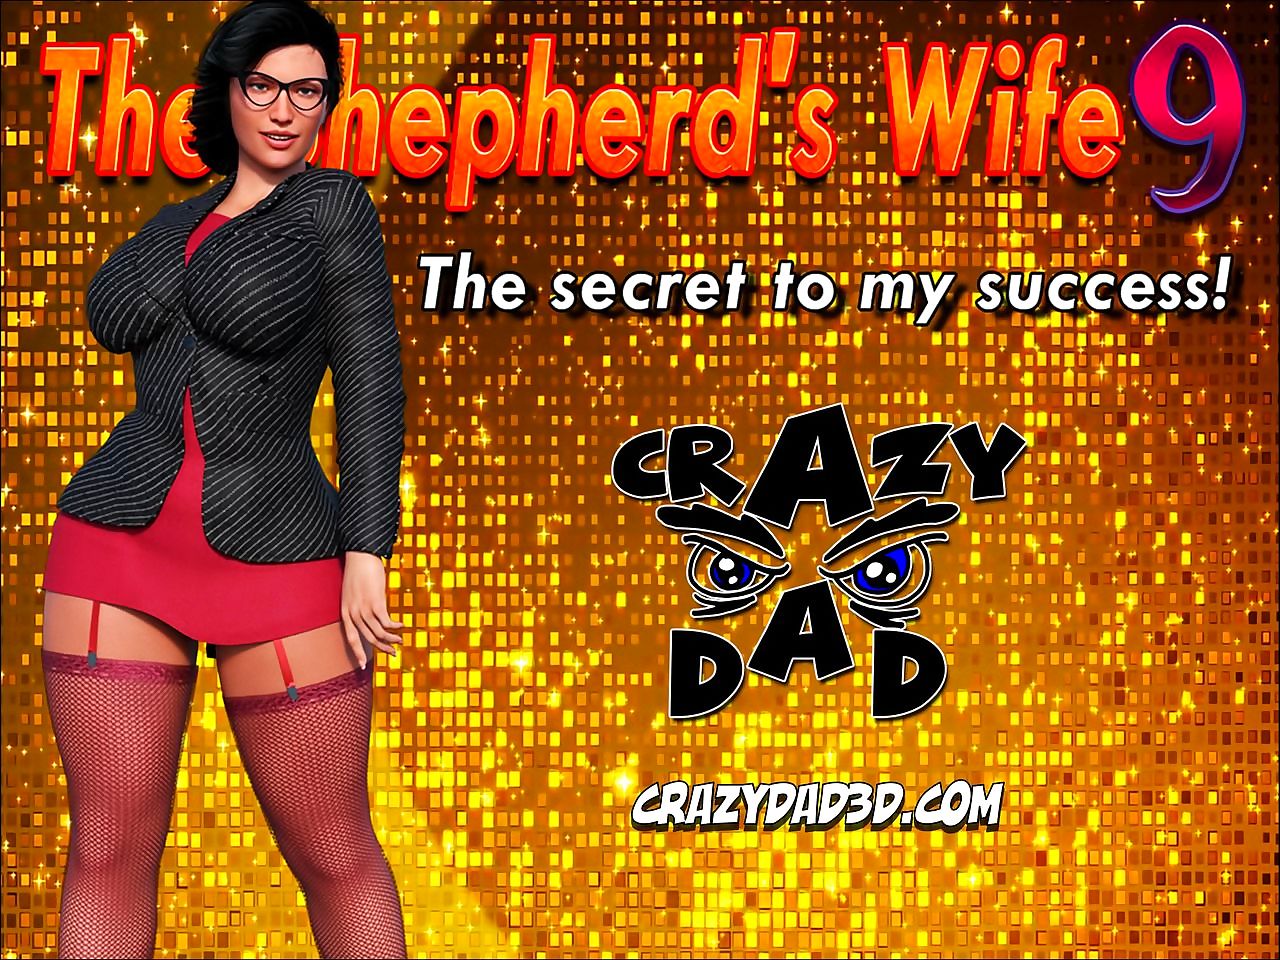 CrazyDad- The Shepherd’s Wife 9 page 1